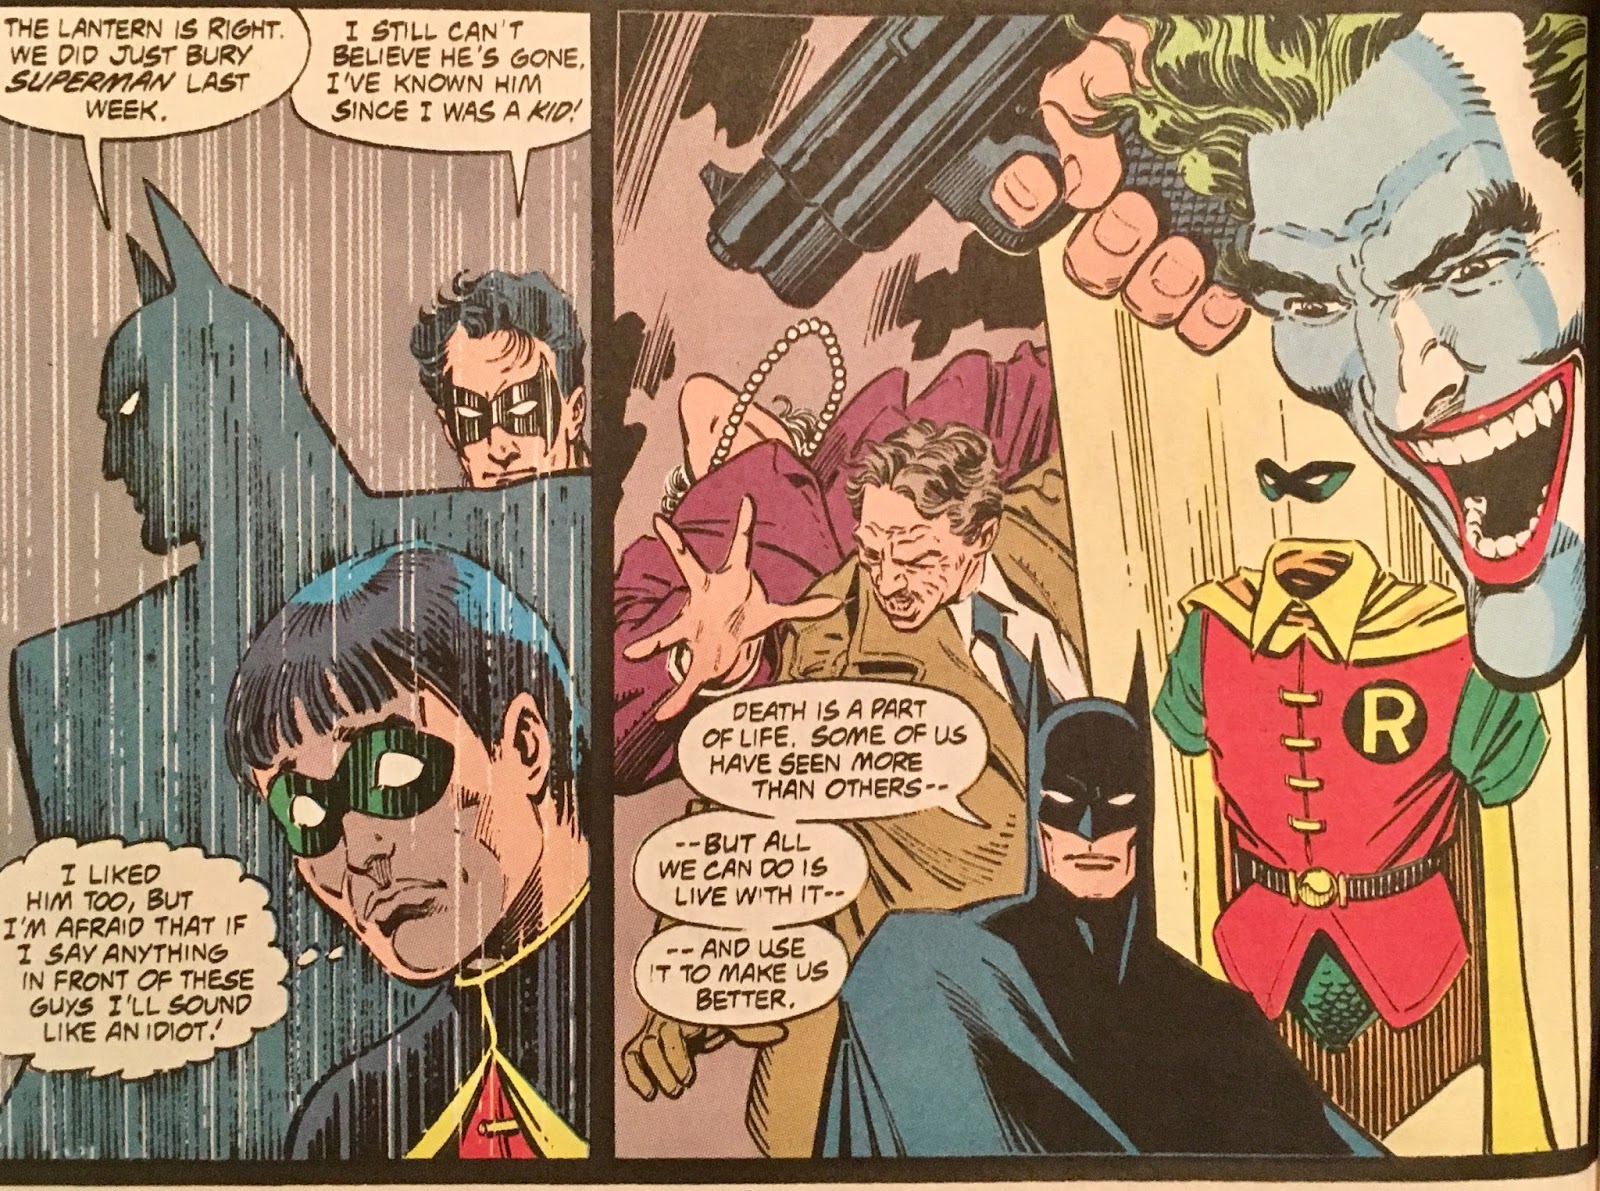 Superman #76 February 1993 DC Comics Jurgens Breeding FUNERAL FOR A FRIEND